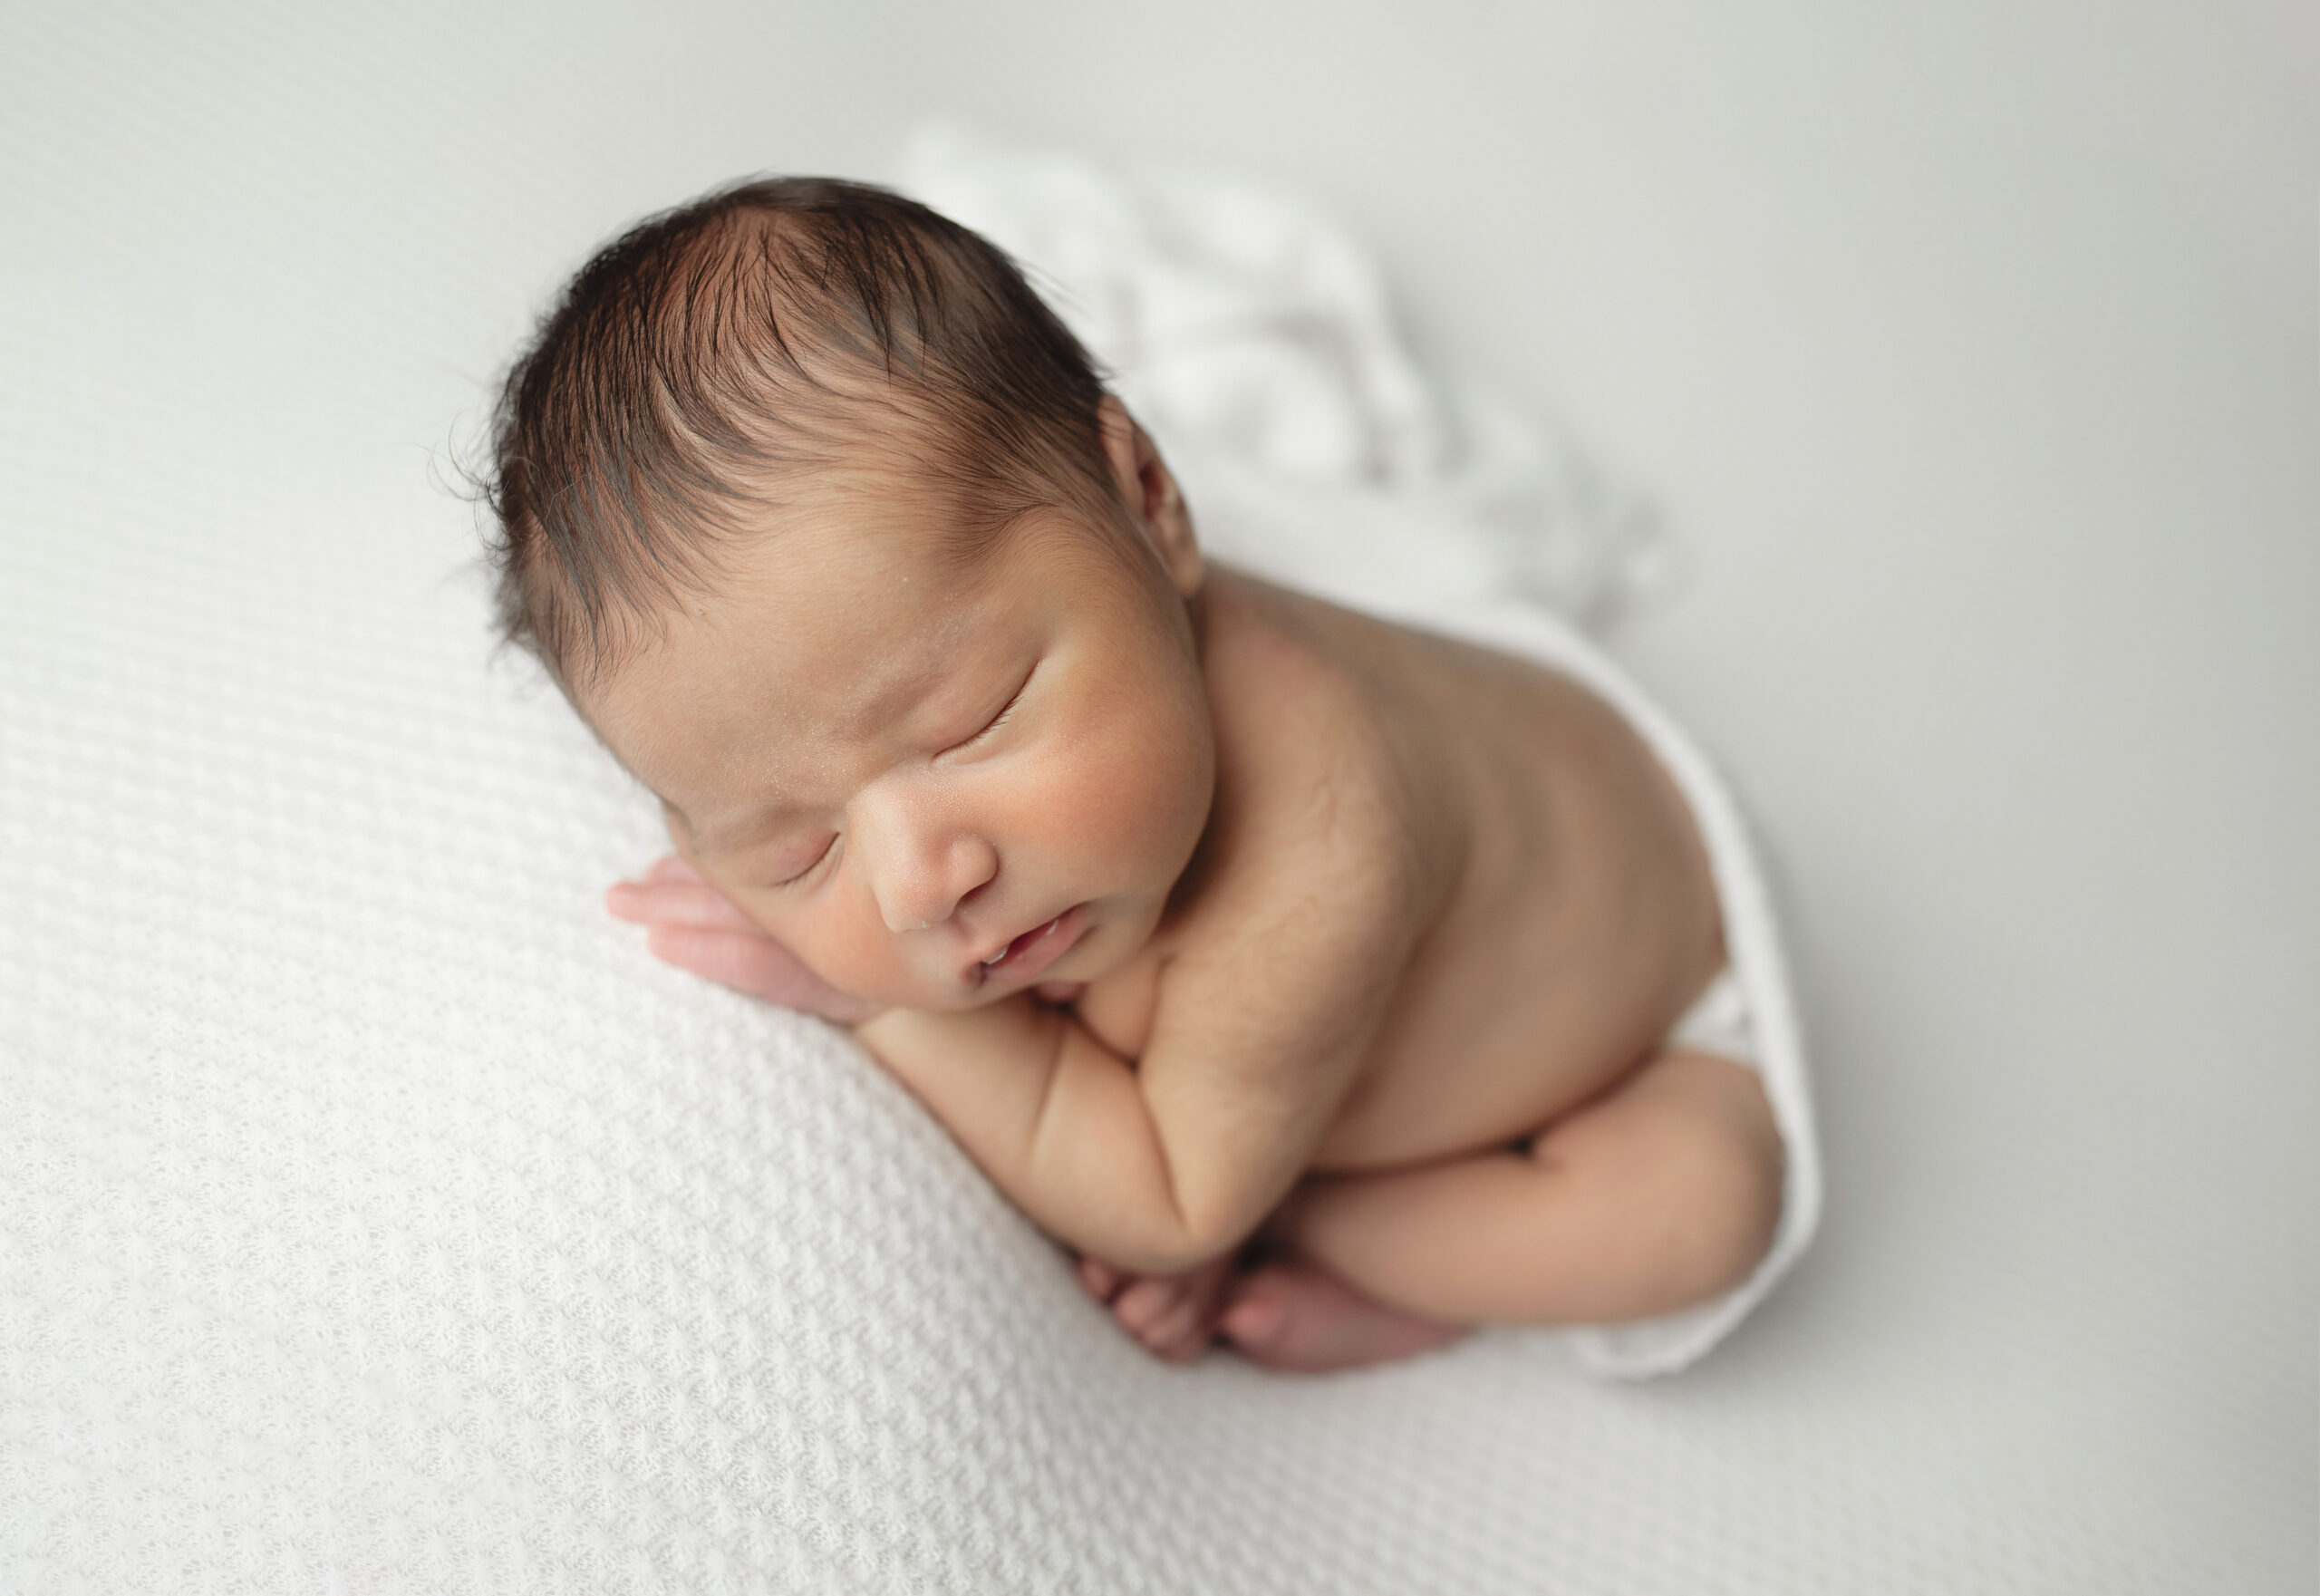 Grand rapids newborn photographer baby sleeping on white blanket